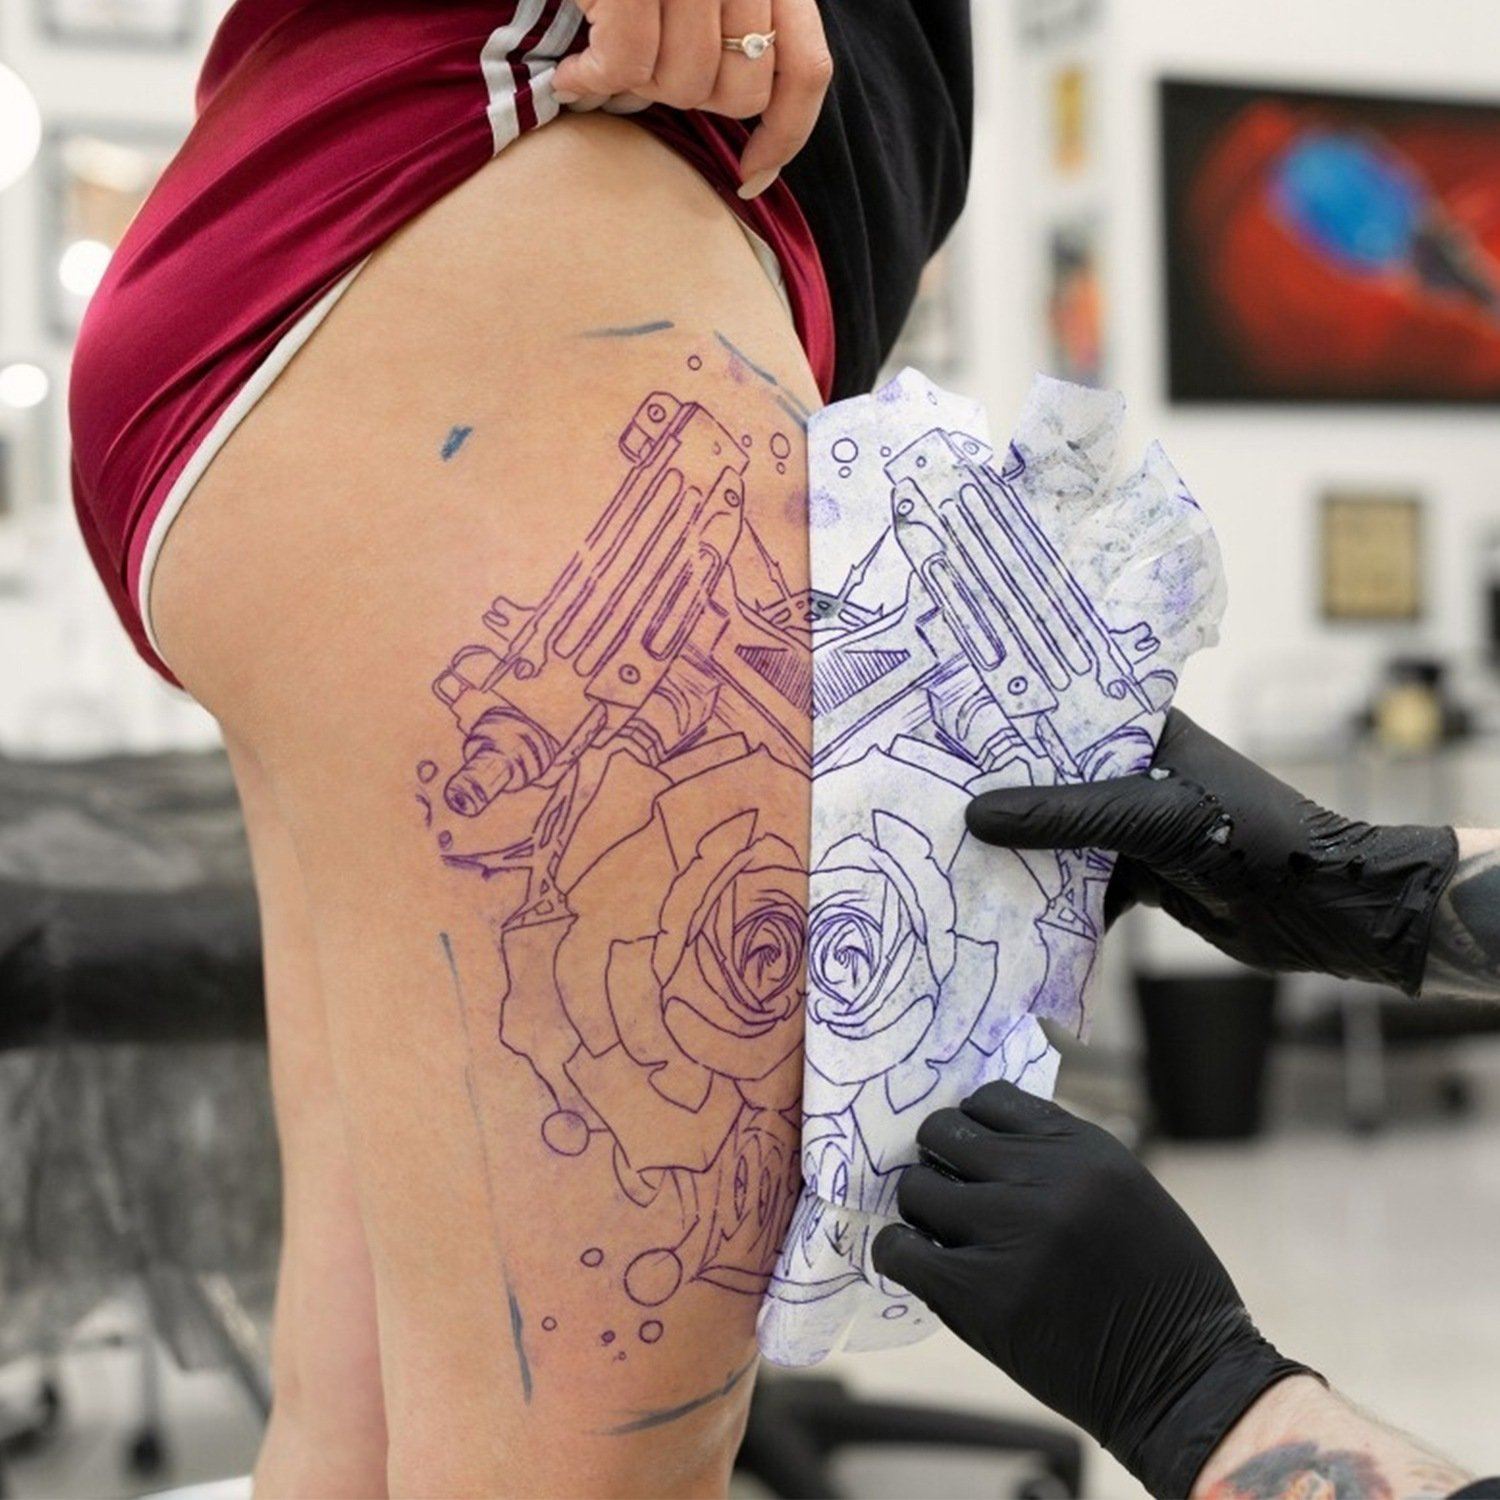 20-Pieces: Tattoo Transfer Paper 4 Layers Tattooing Skin Tattoo Kit A4